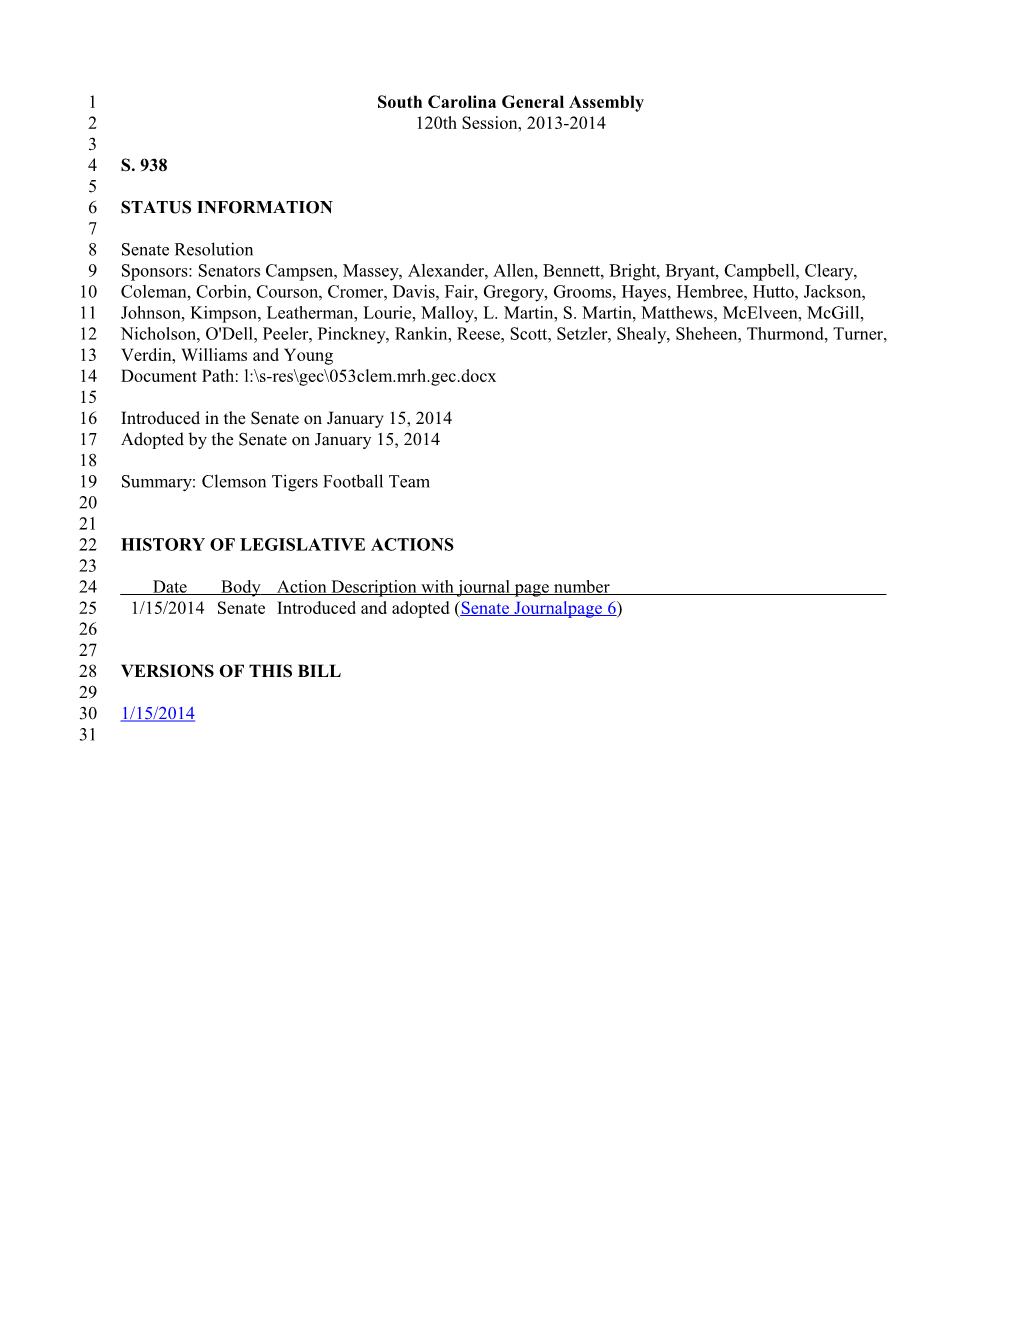 2013-2014 Bill 938: Clemson Tigers Football Team - South Carolina Legislature Online